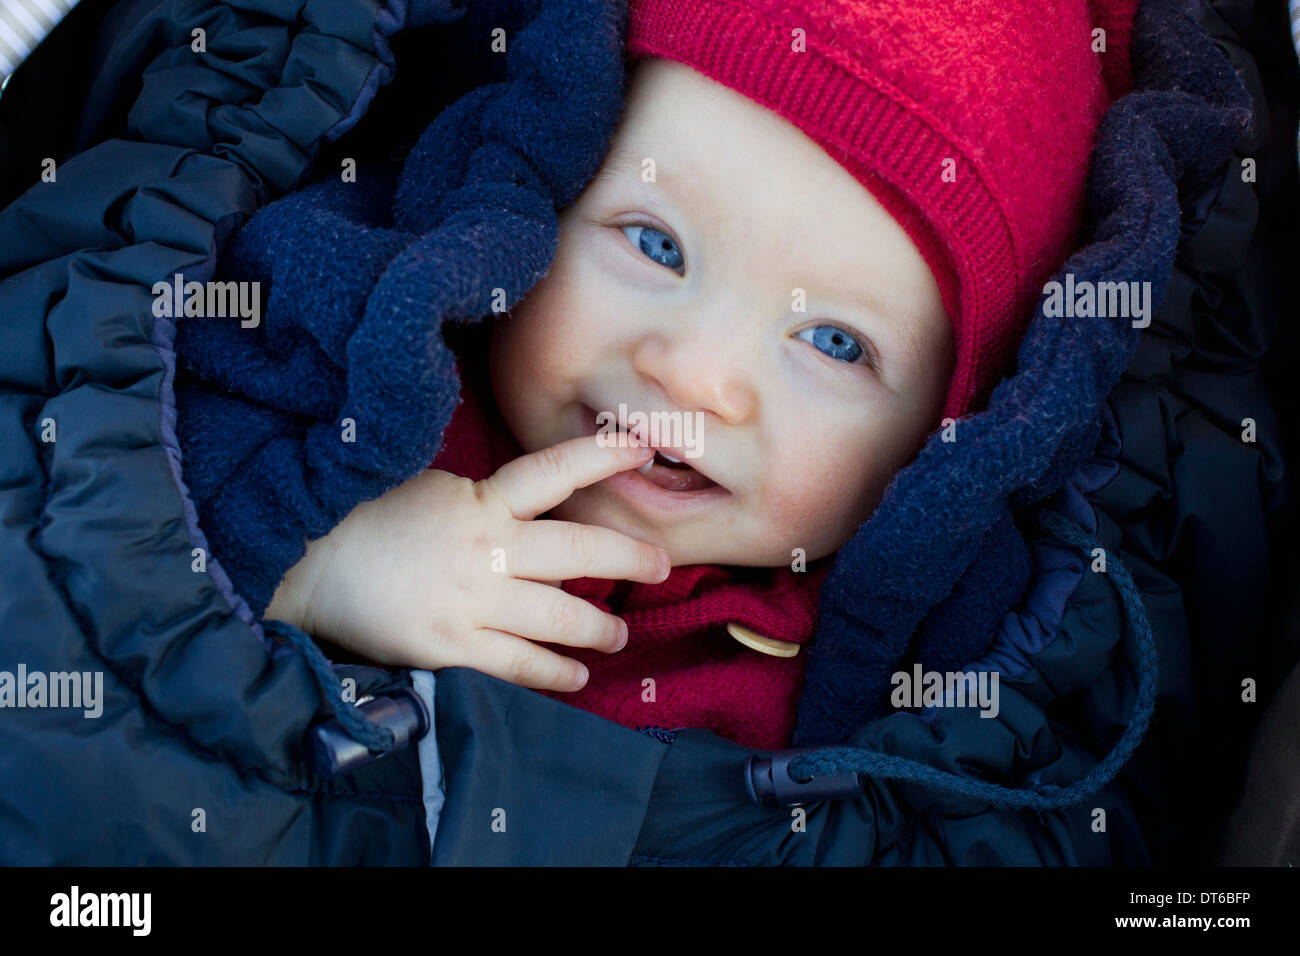 Portrait of baby girl in sleeping bag wearing hat Stock Photo